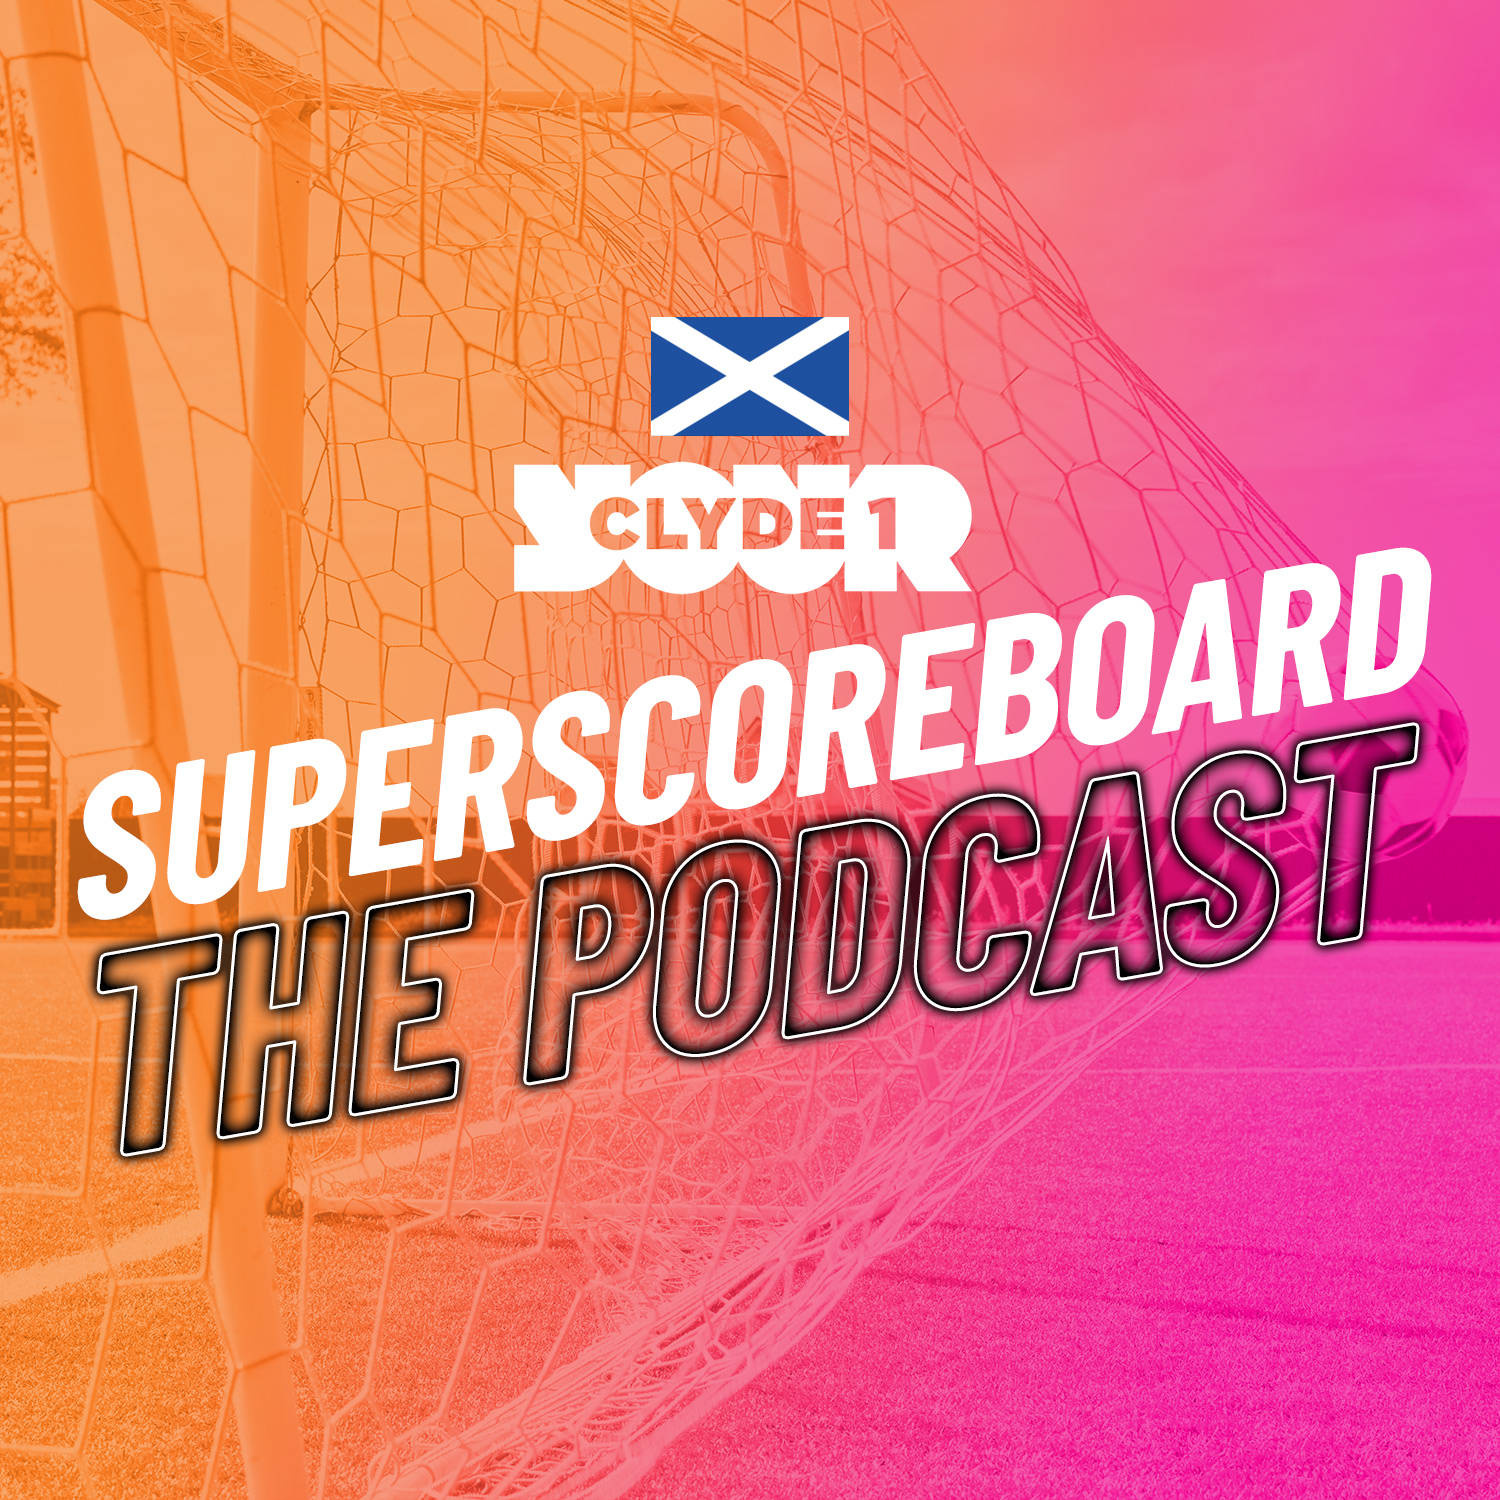 Thursday 7th December Clyde 1 Superscoreboard